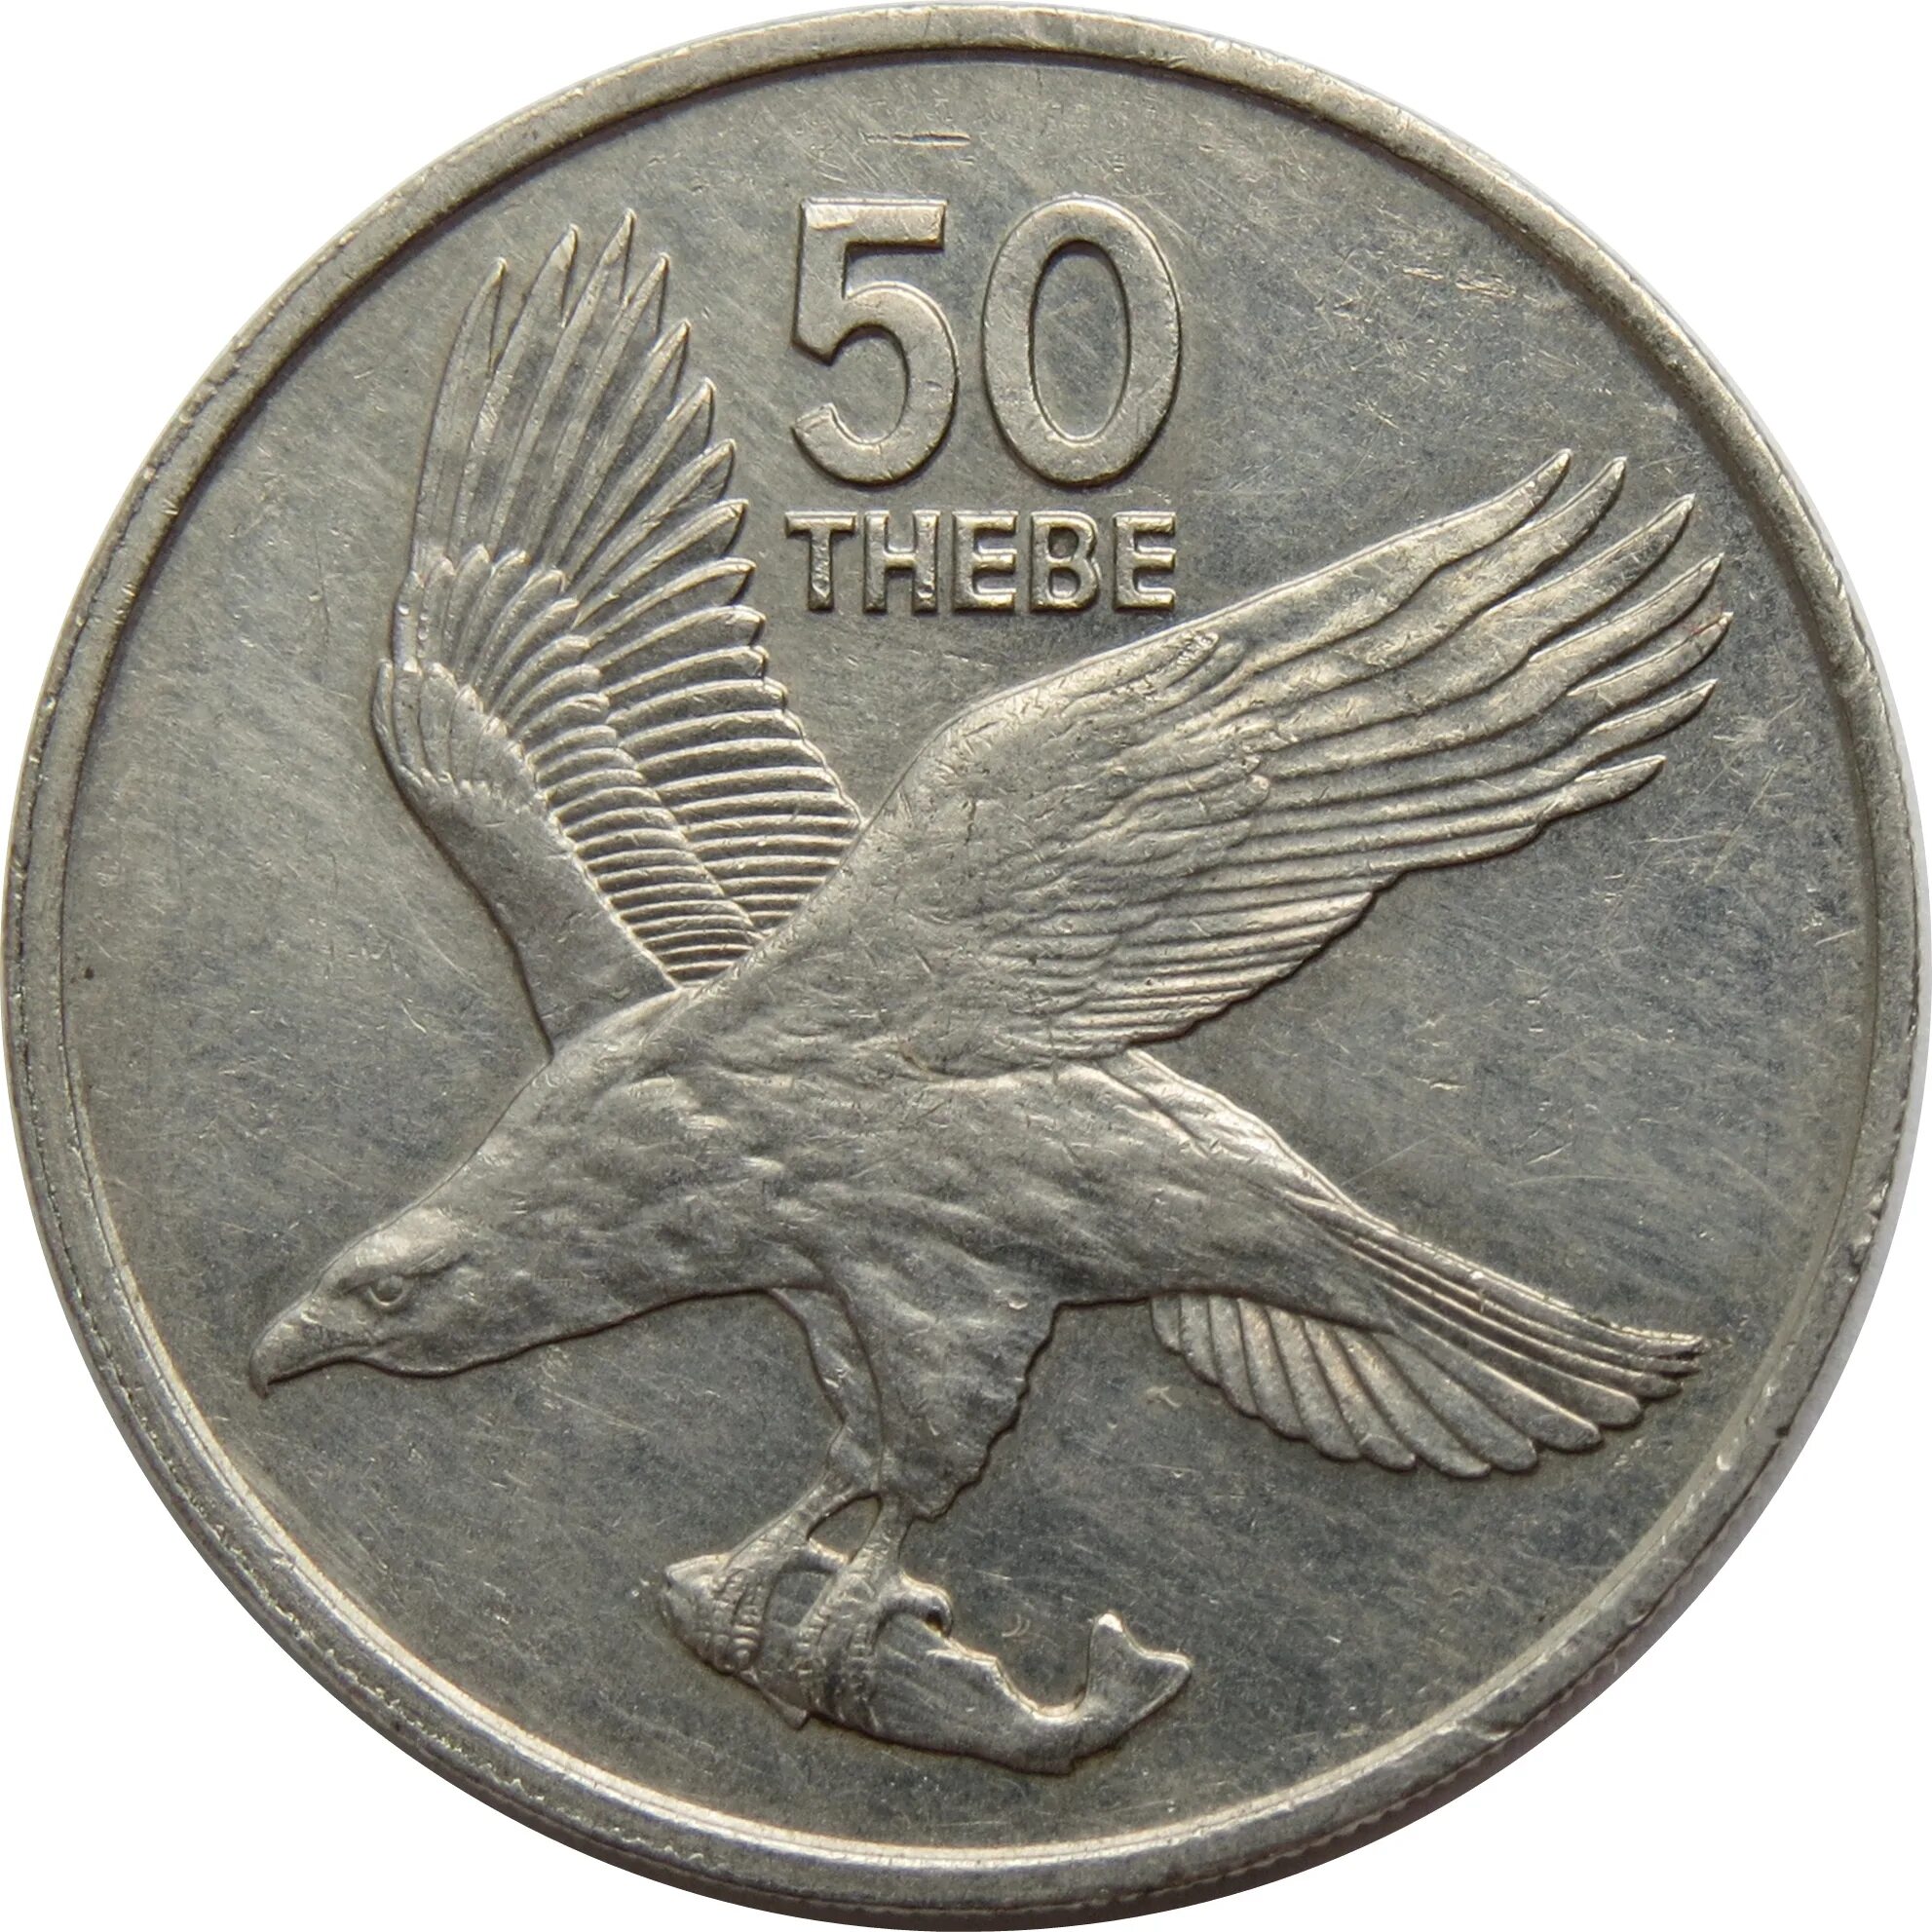 Монета с птицей. Монеты Ботсвана набор. Birds монеты